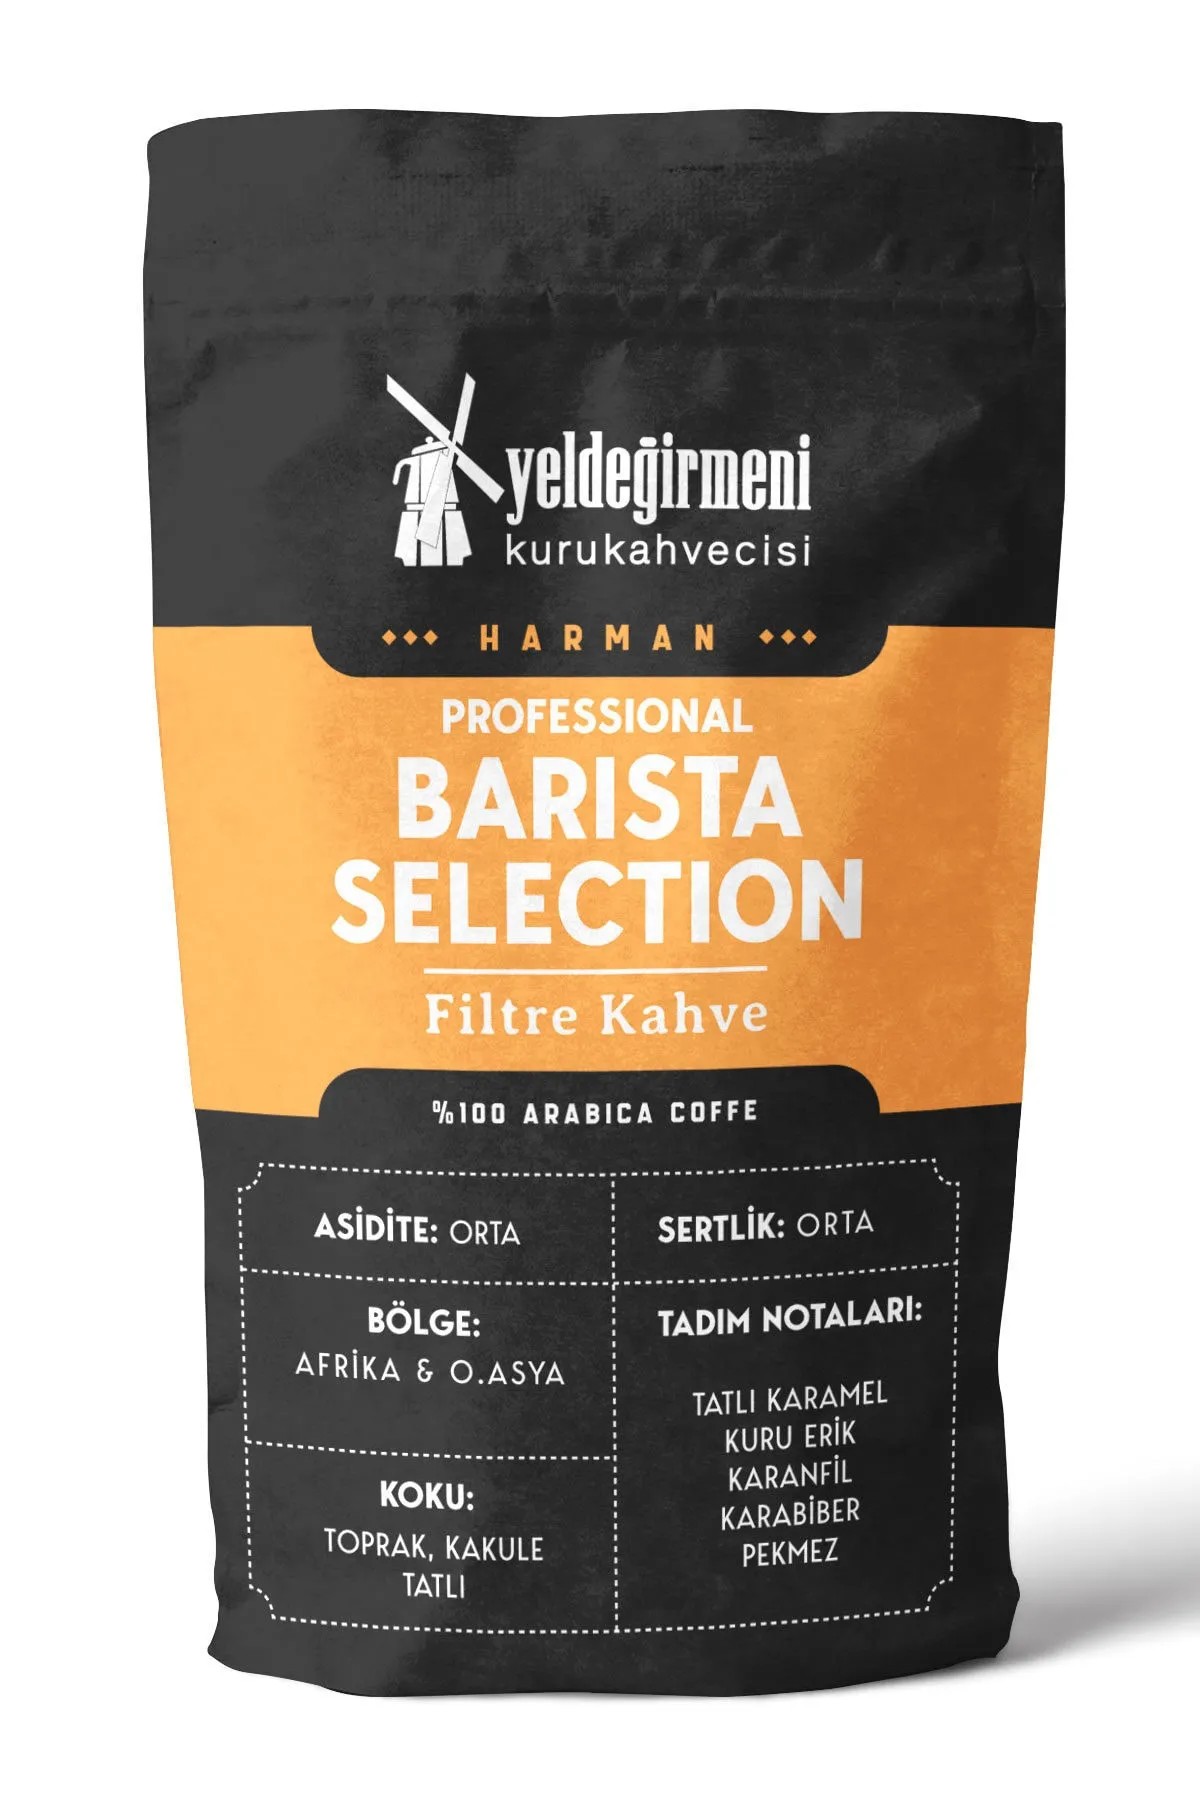 Professional Barista Selection Filtre Kahve